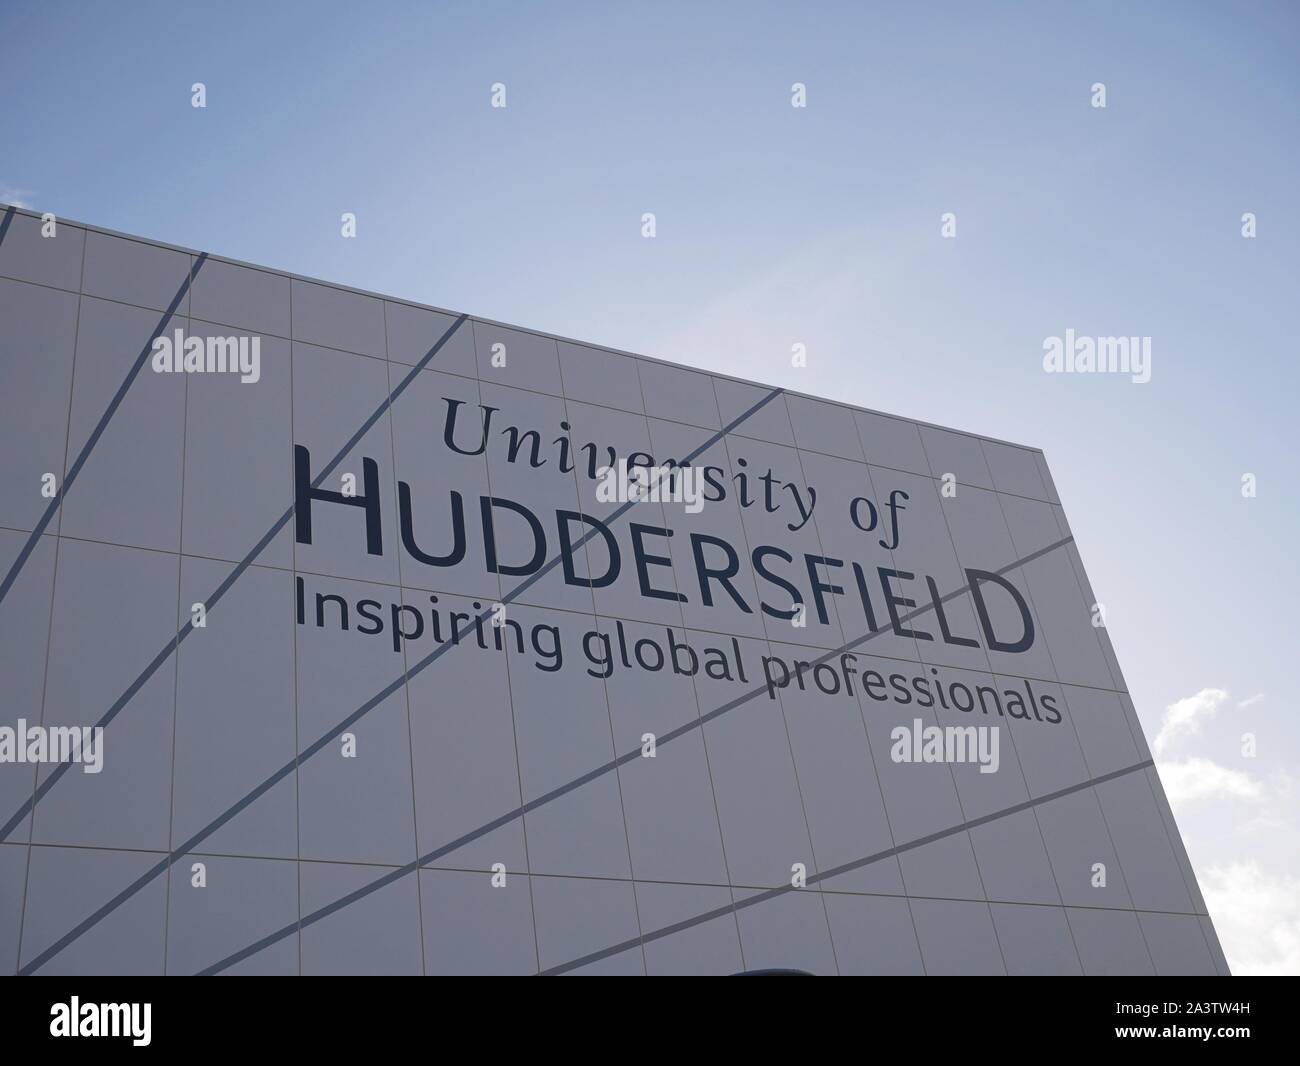 Université de Huddersfield inspiring global professionals écrit sur le Barbara Hepworth building à l'université de Huddersfield Yorkshire Angleterre Banque D'Images